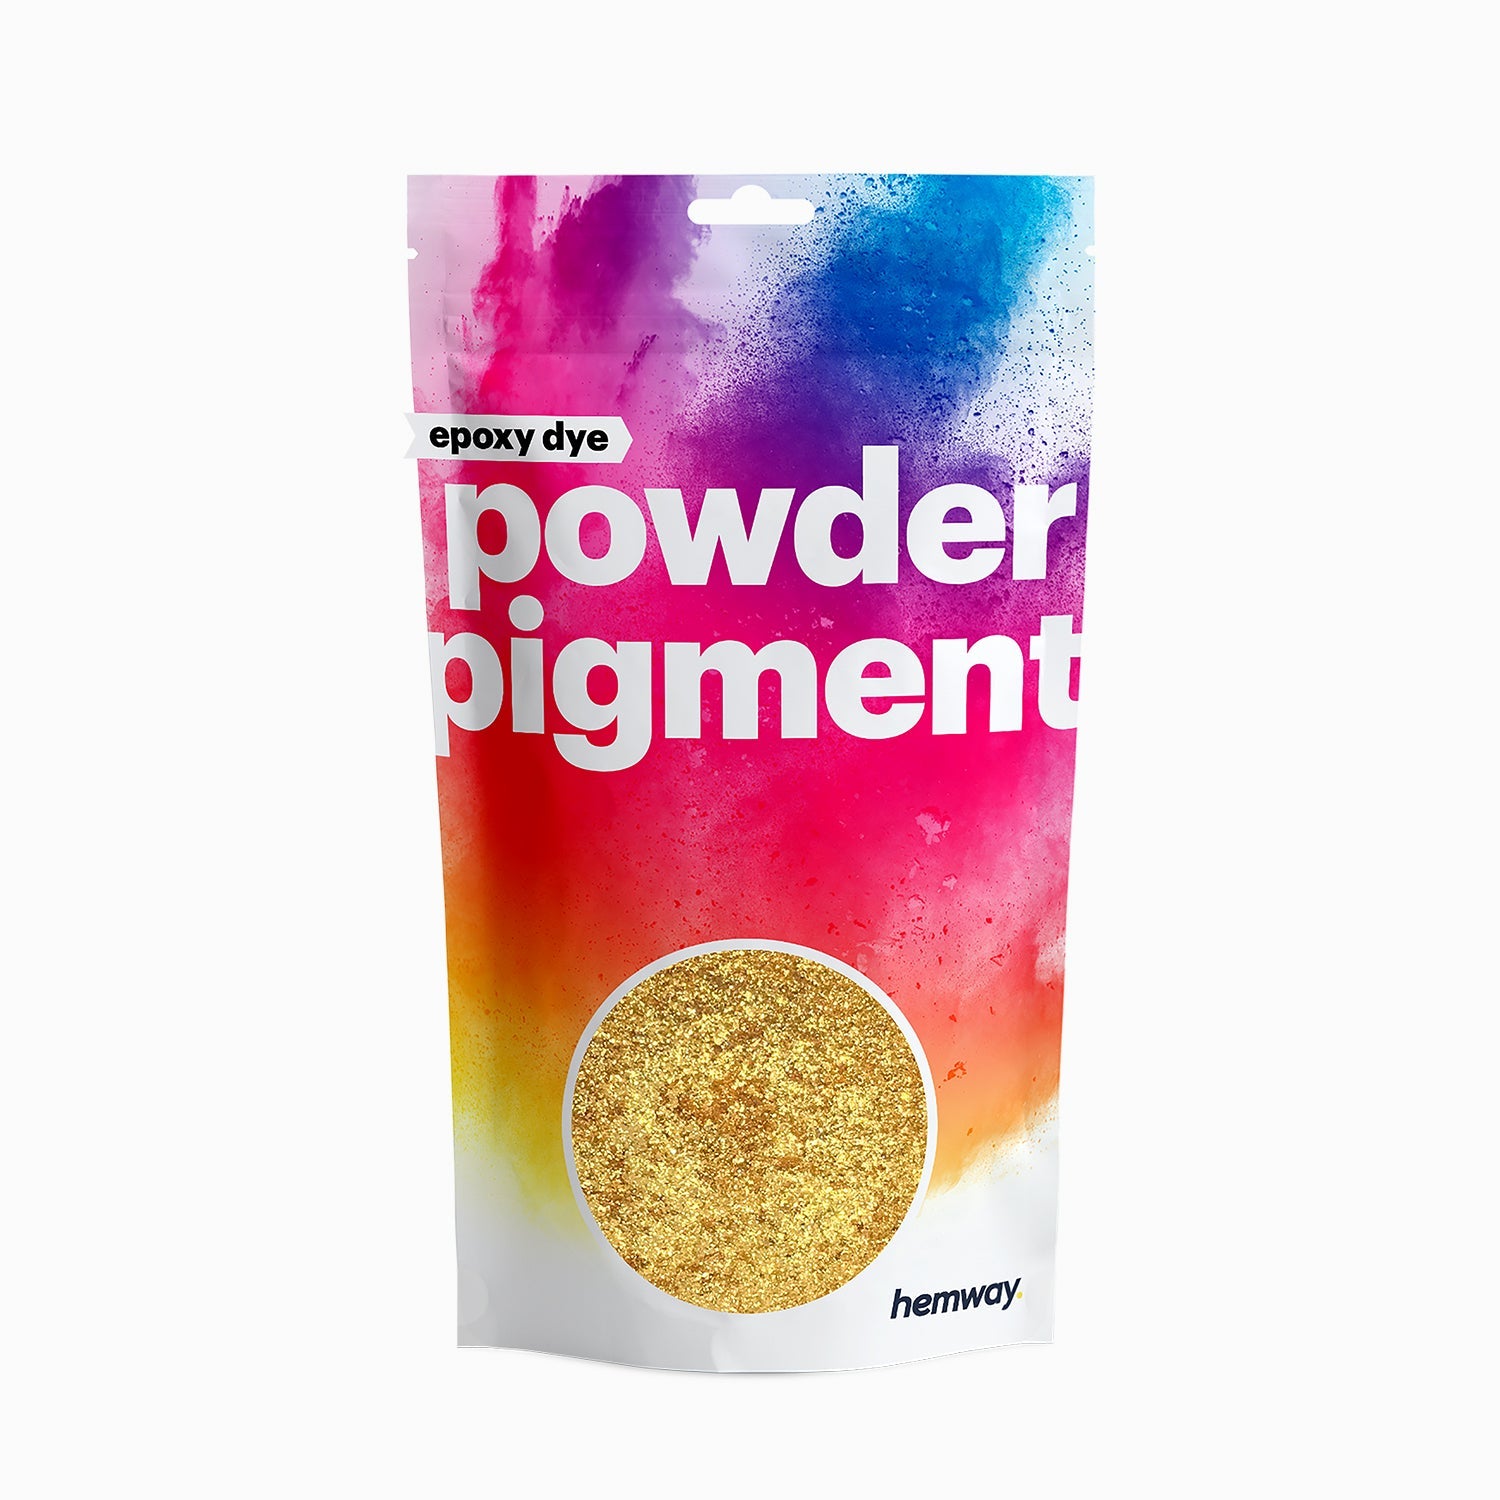 NODDWAY Metallic Pigment Powder 20ml/Jar Gold Epoxy Resin Color